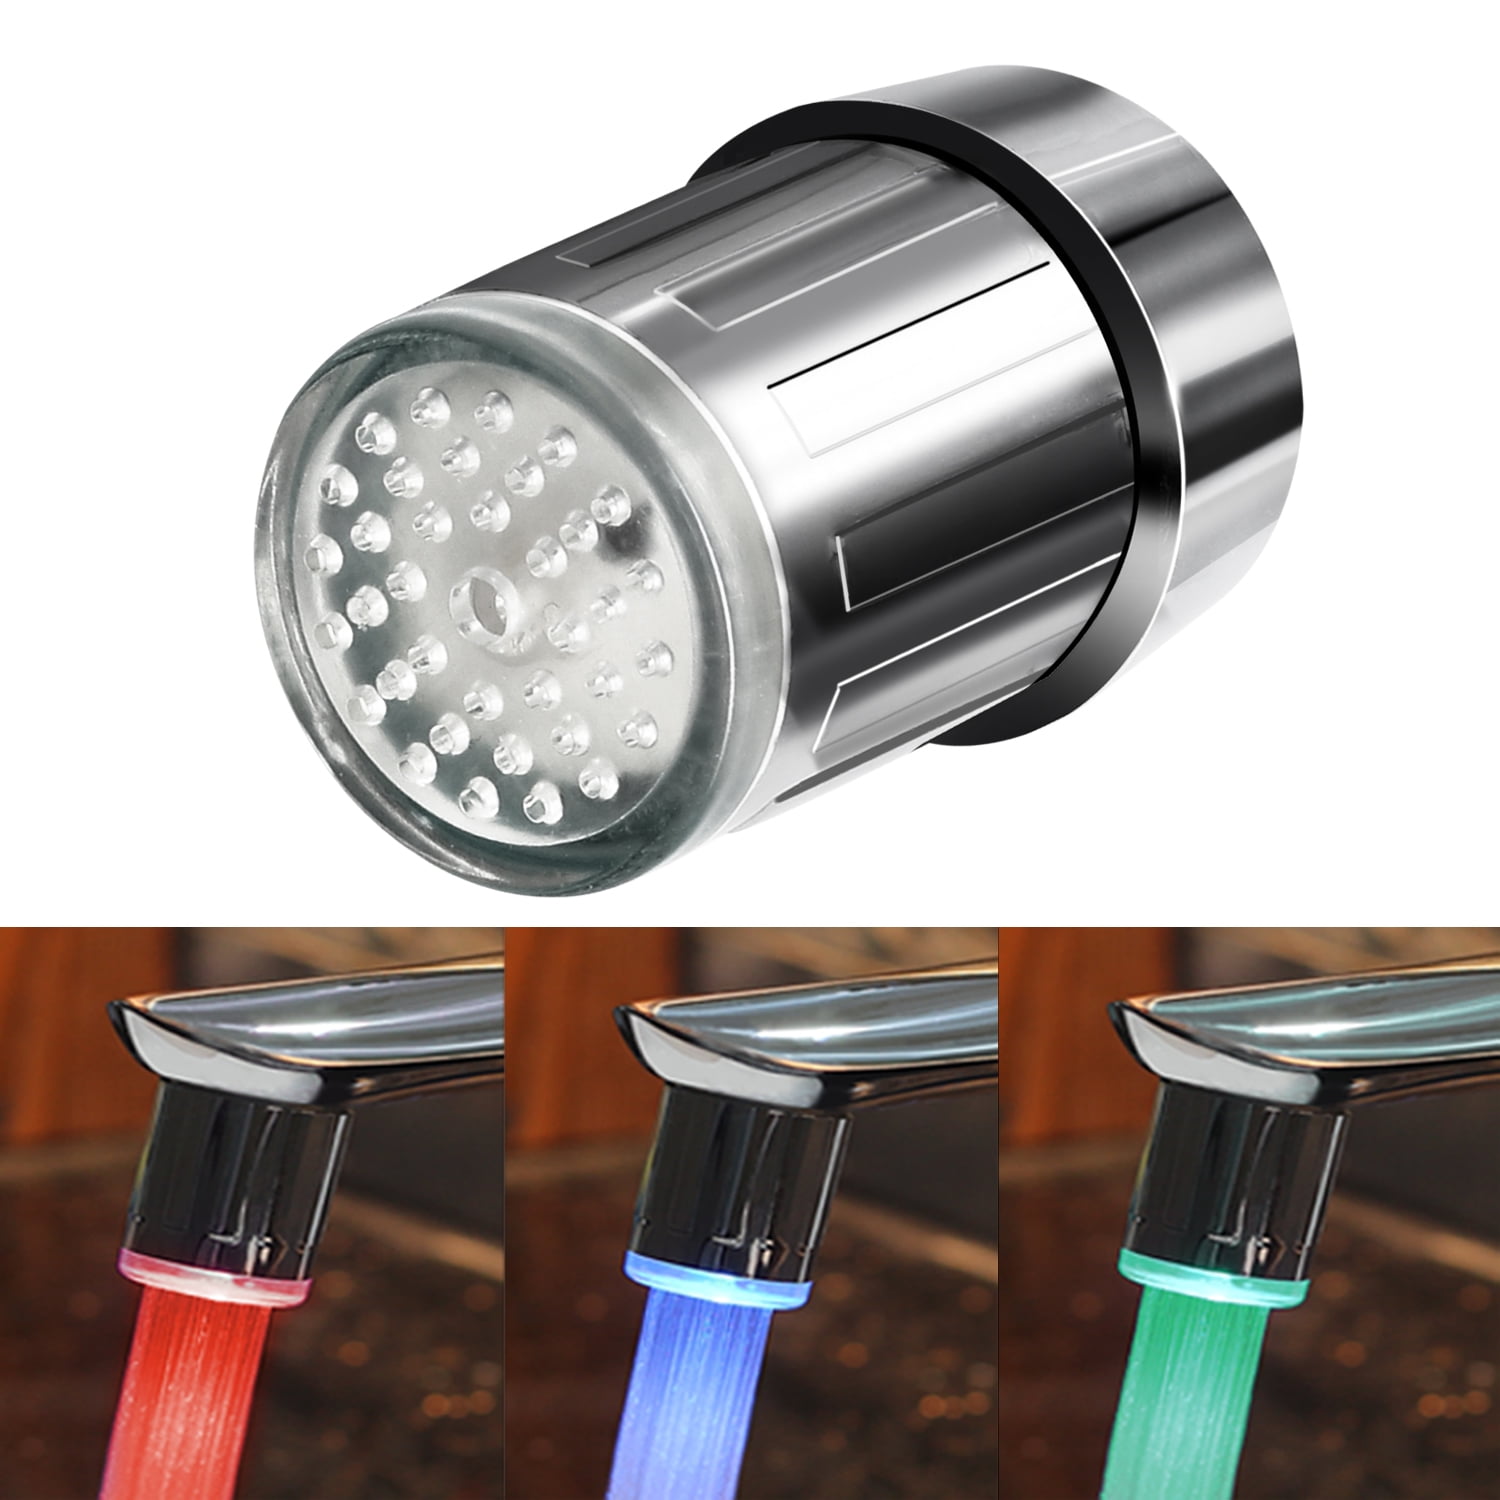 Sensor LED Light Water Faucet 3 Color Changing Temperature Control Tap